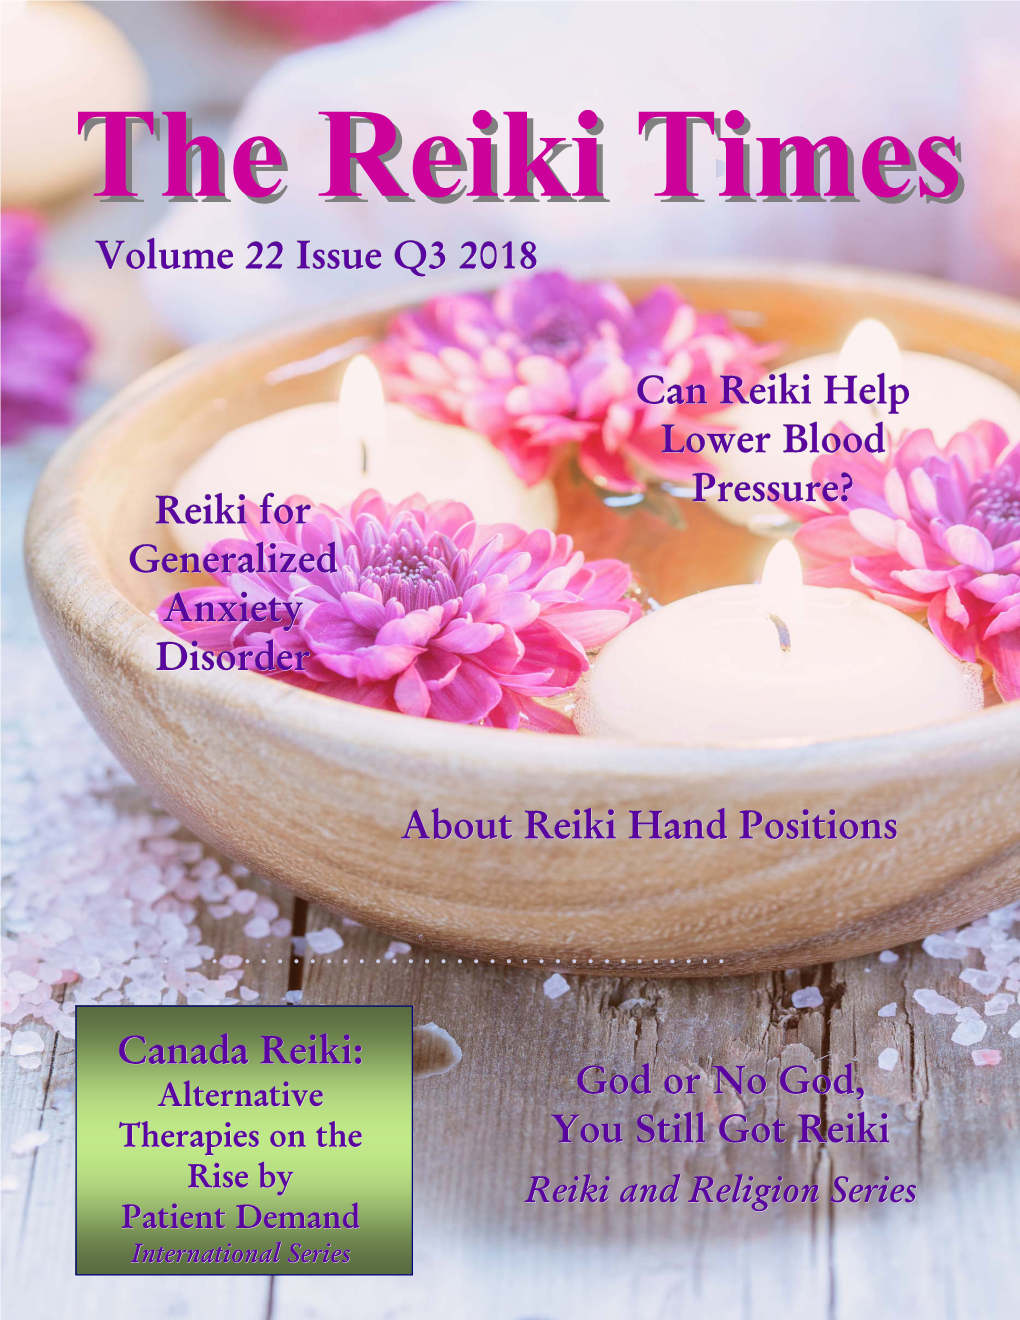 The Reiki Times Volume 22 Q3 2018